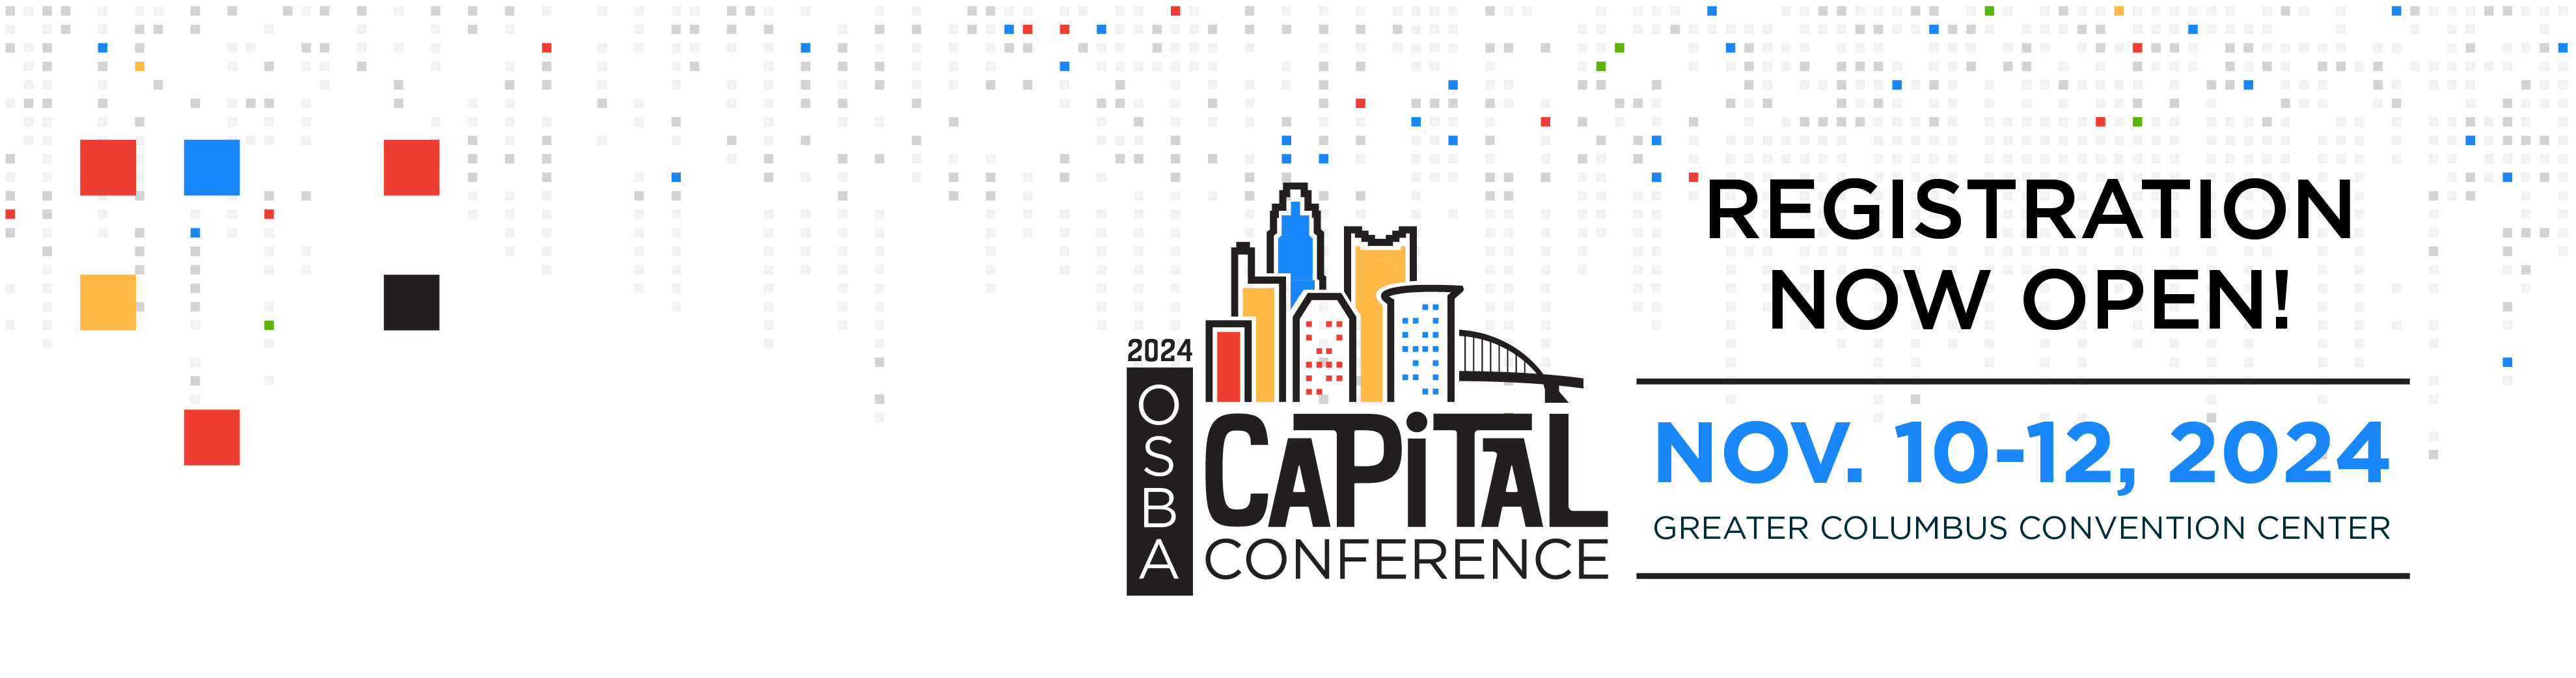 OSBA Capital Conference logo